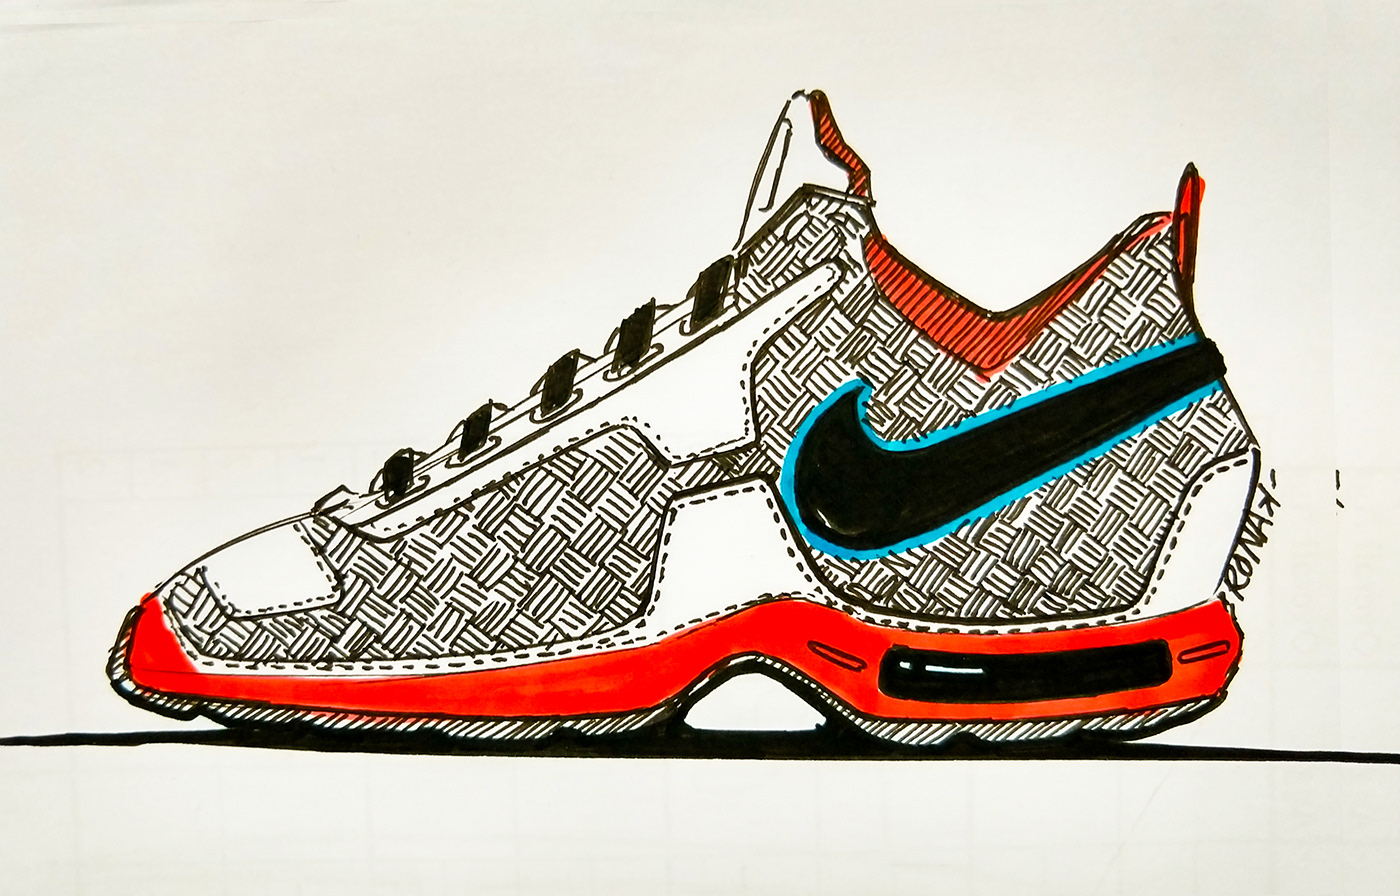 footwear Concept Sketches shoes design concepts sketches footwaer ideas